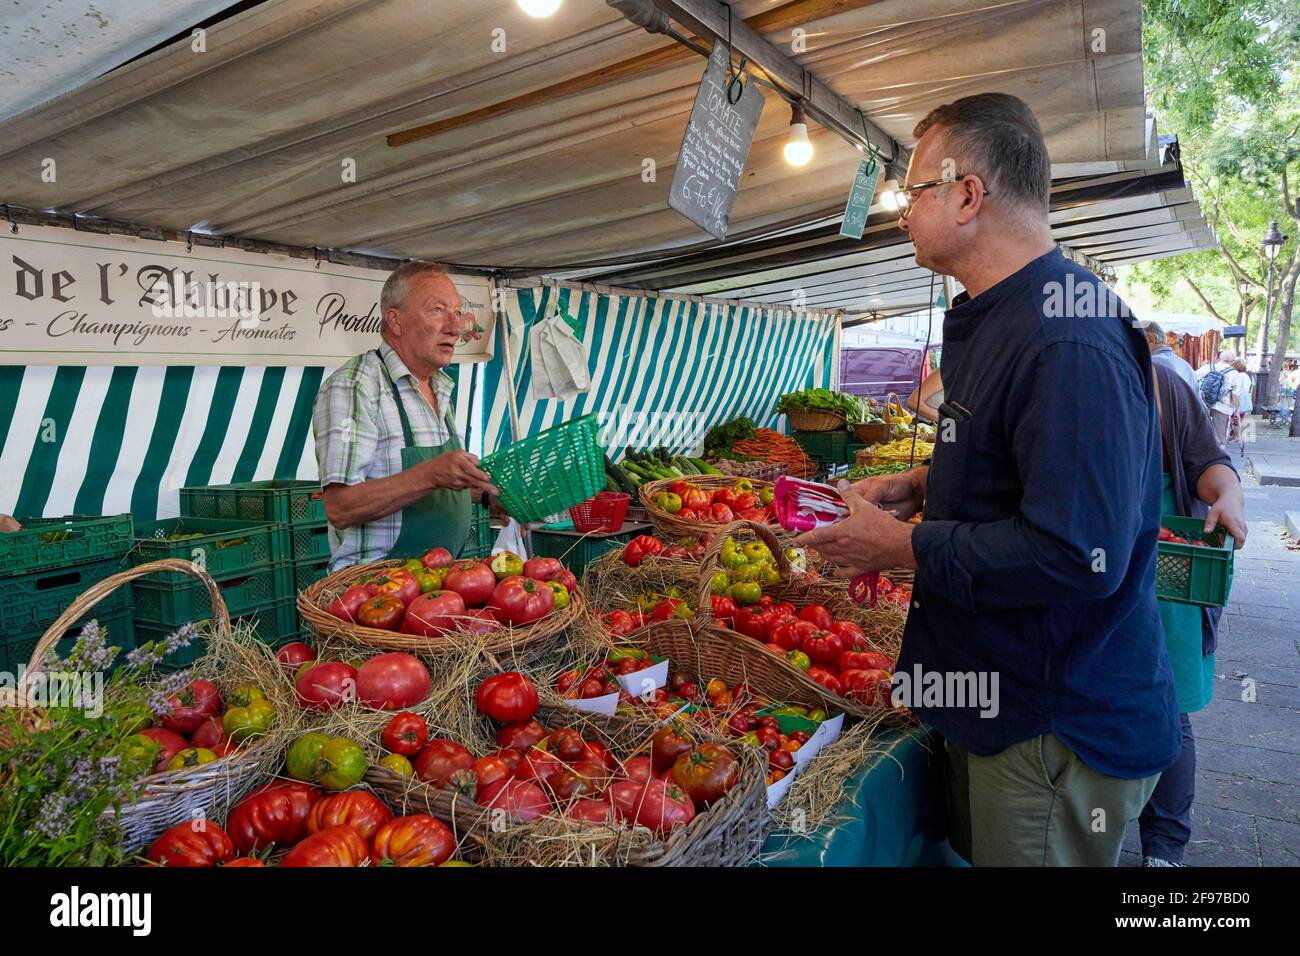 Gemüseverkäufer in der Marche Bastille am Boulevard Richard Lenoir Le Marais Paris Frankreich Stockfoto